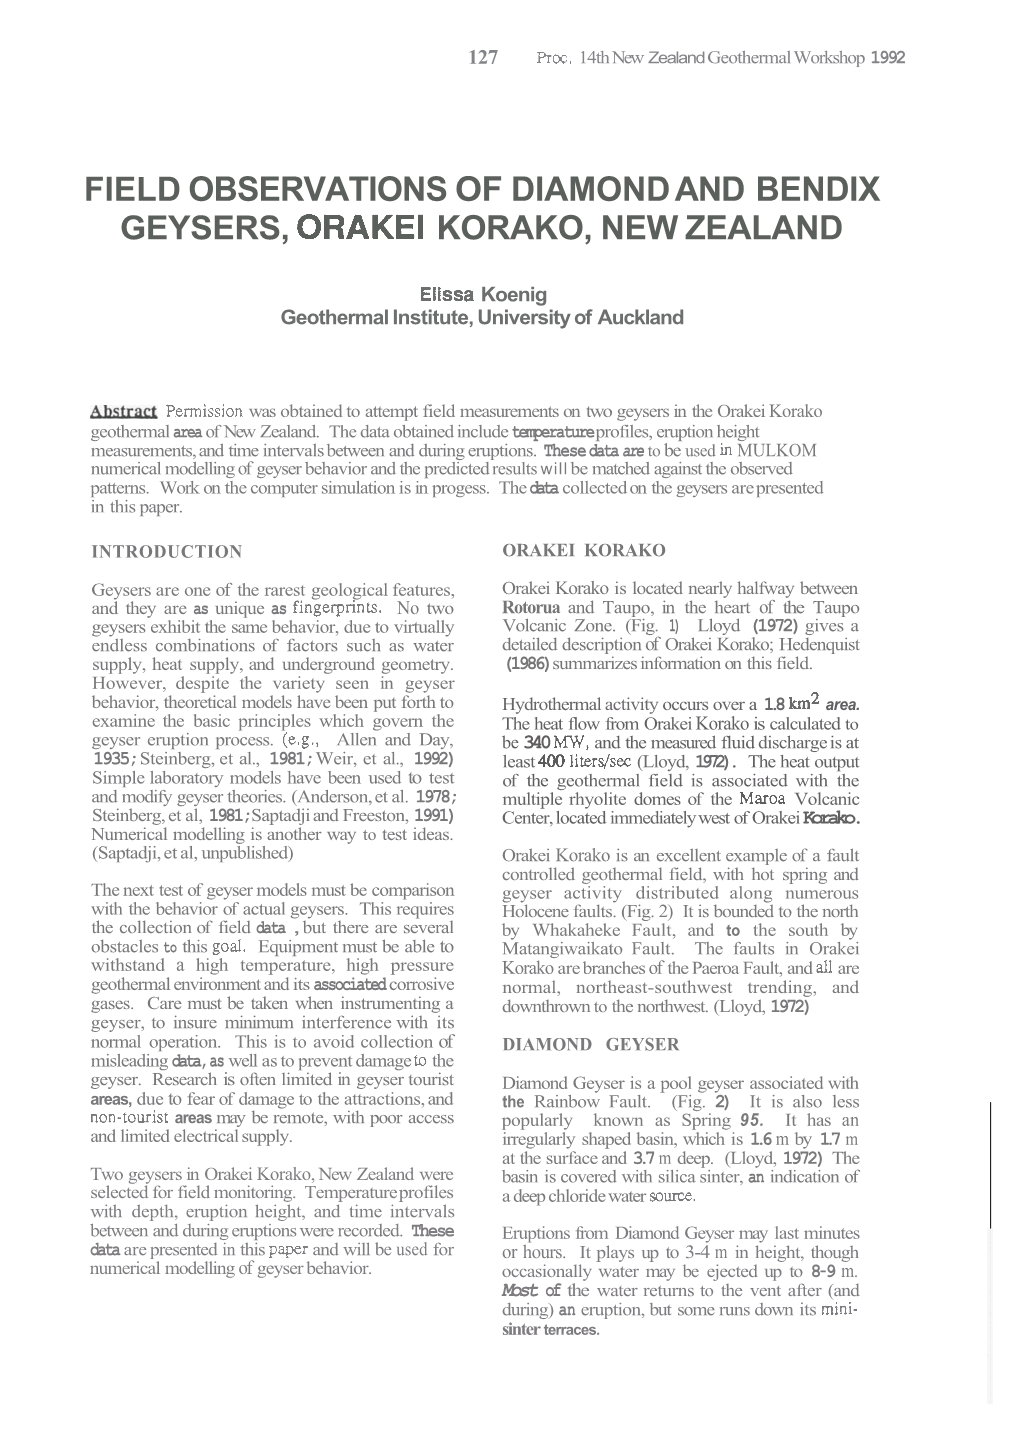 Field Observations of Diamond and Bendix Geysers, Korako, New Zealand